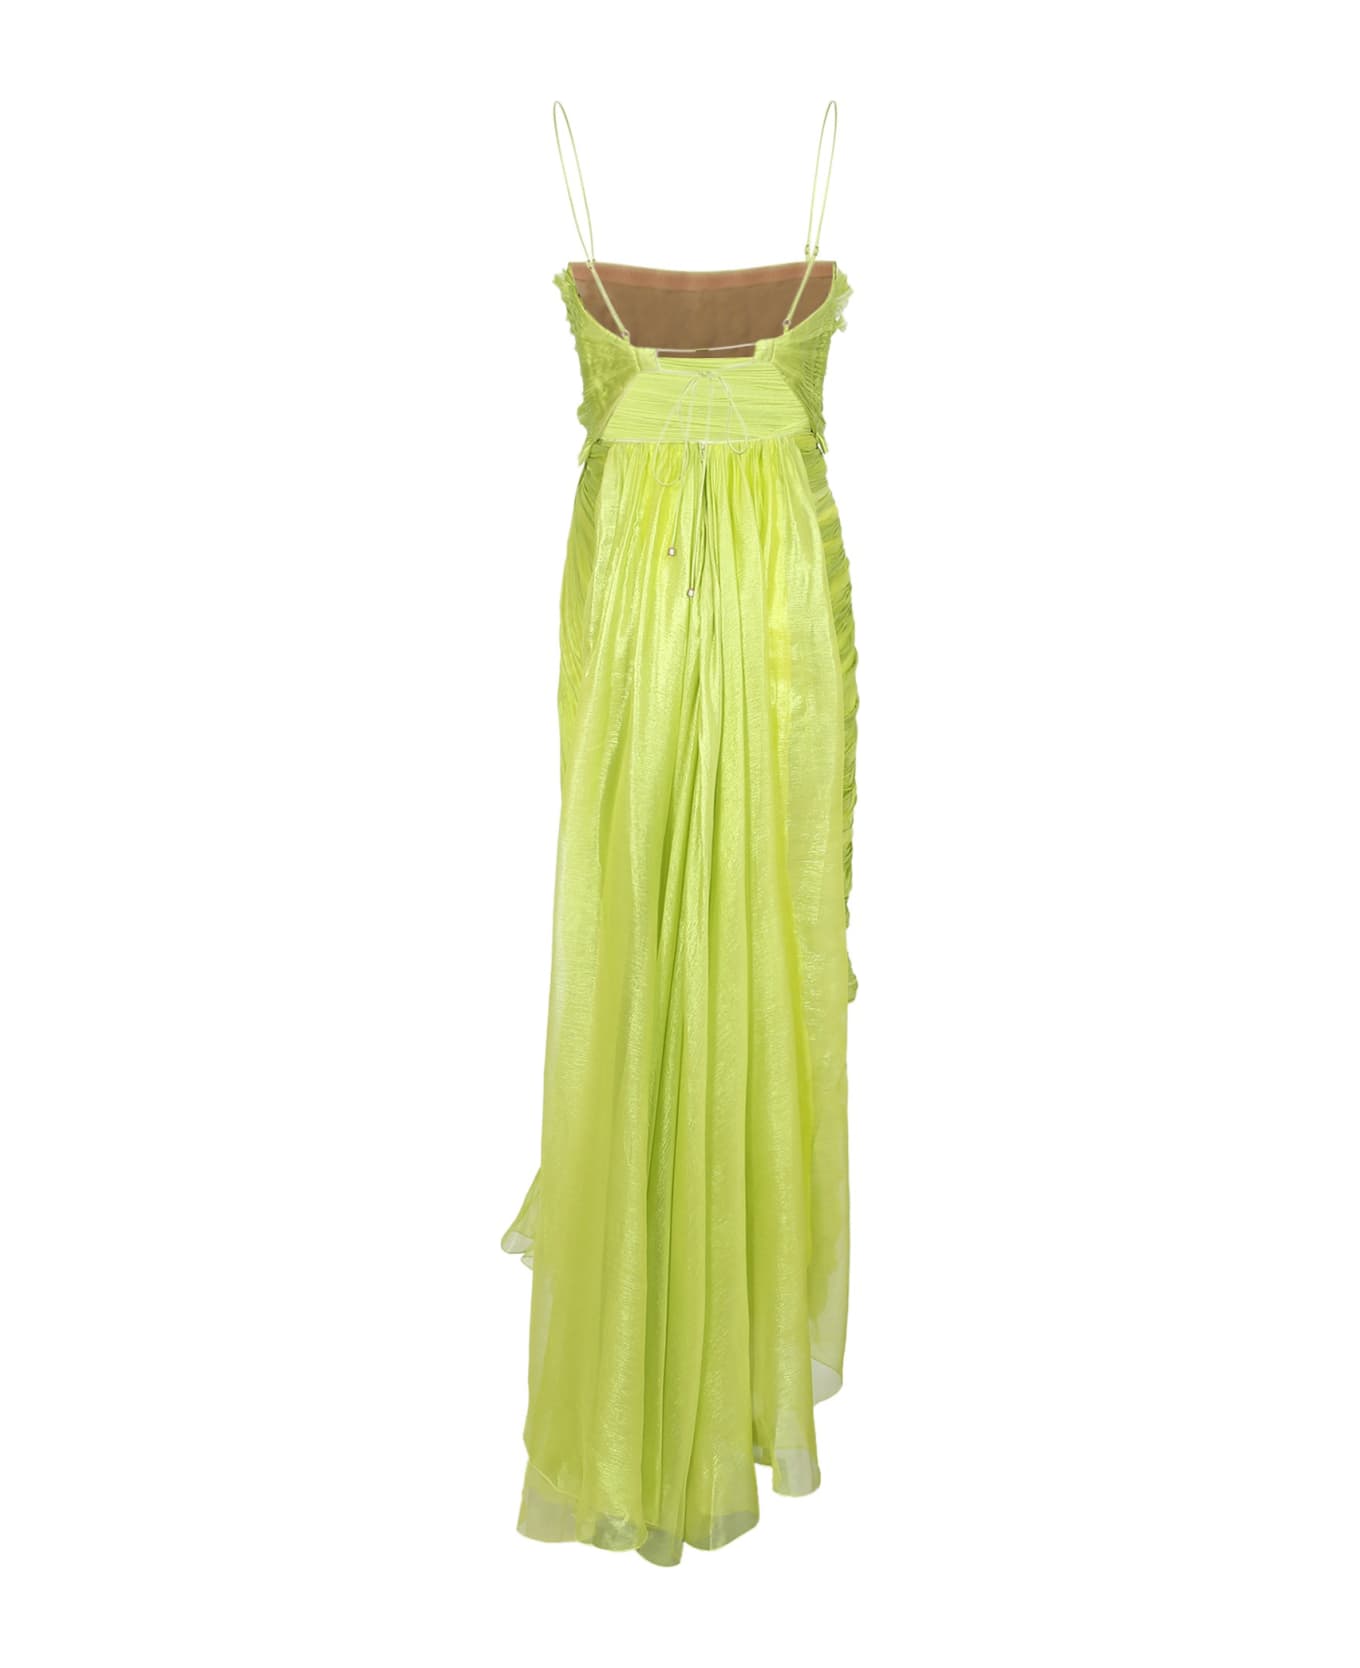 Maria Lucia Hohan Lime Green Siona Dress - Green